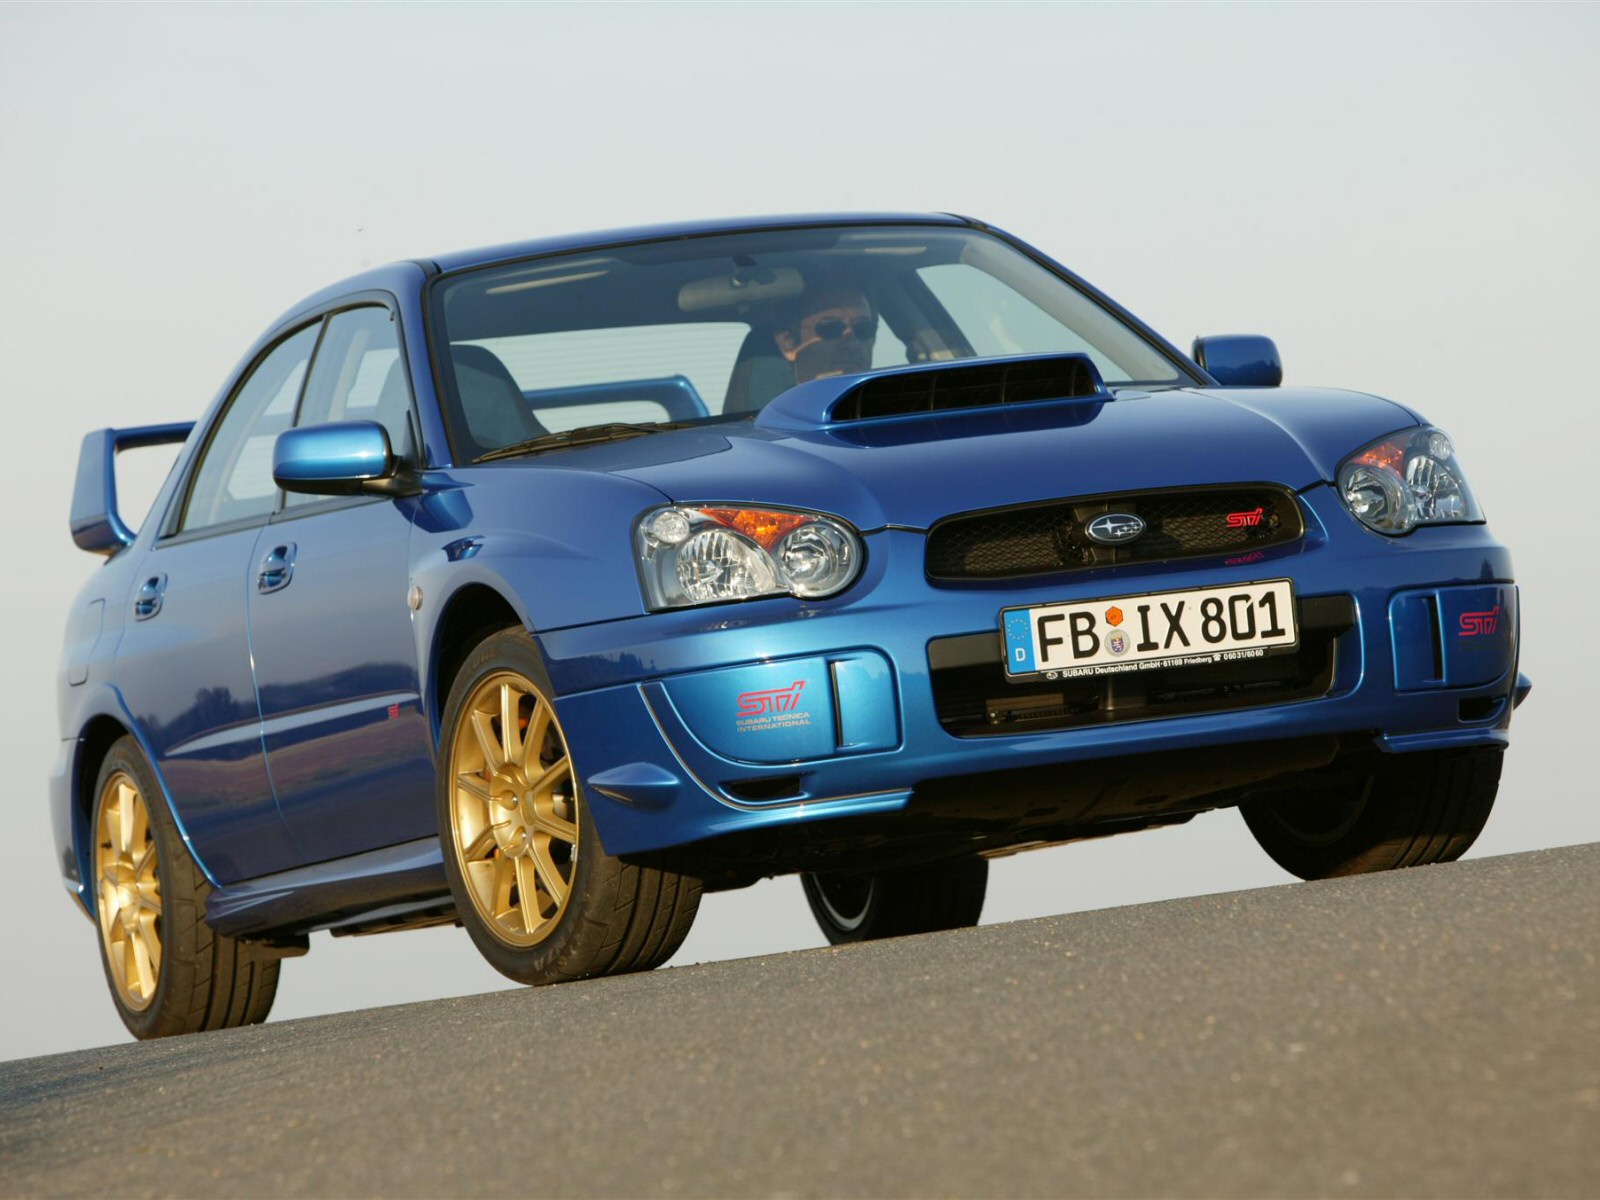 Car in pictures car photo gallery » Subaru Impreza WRX